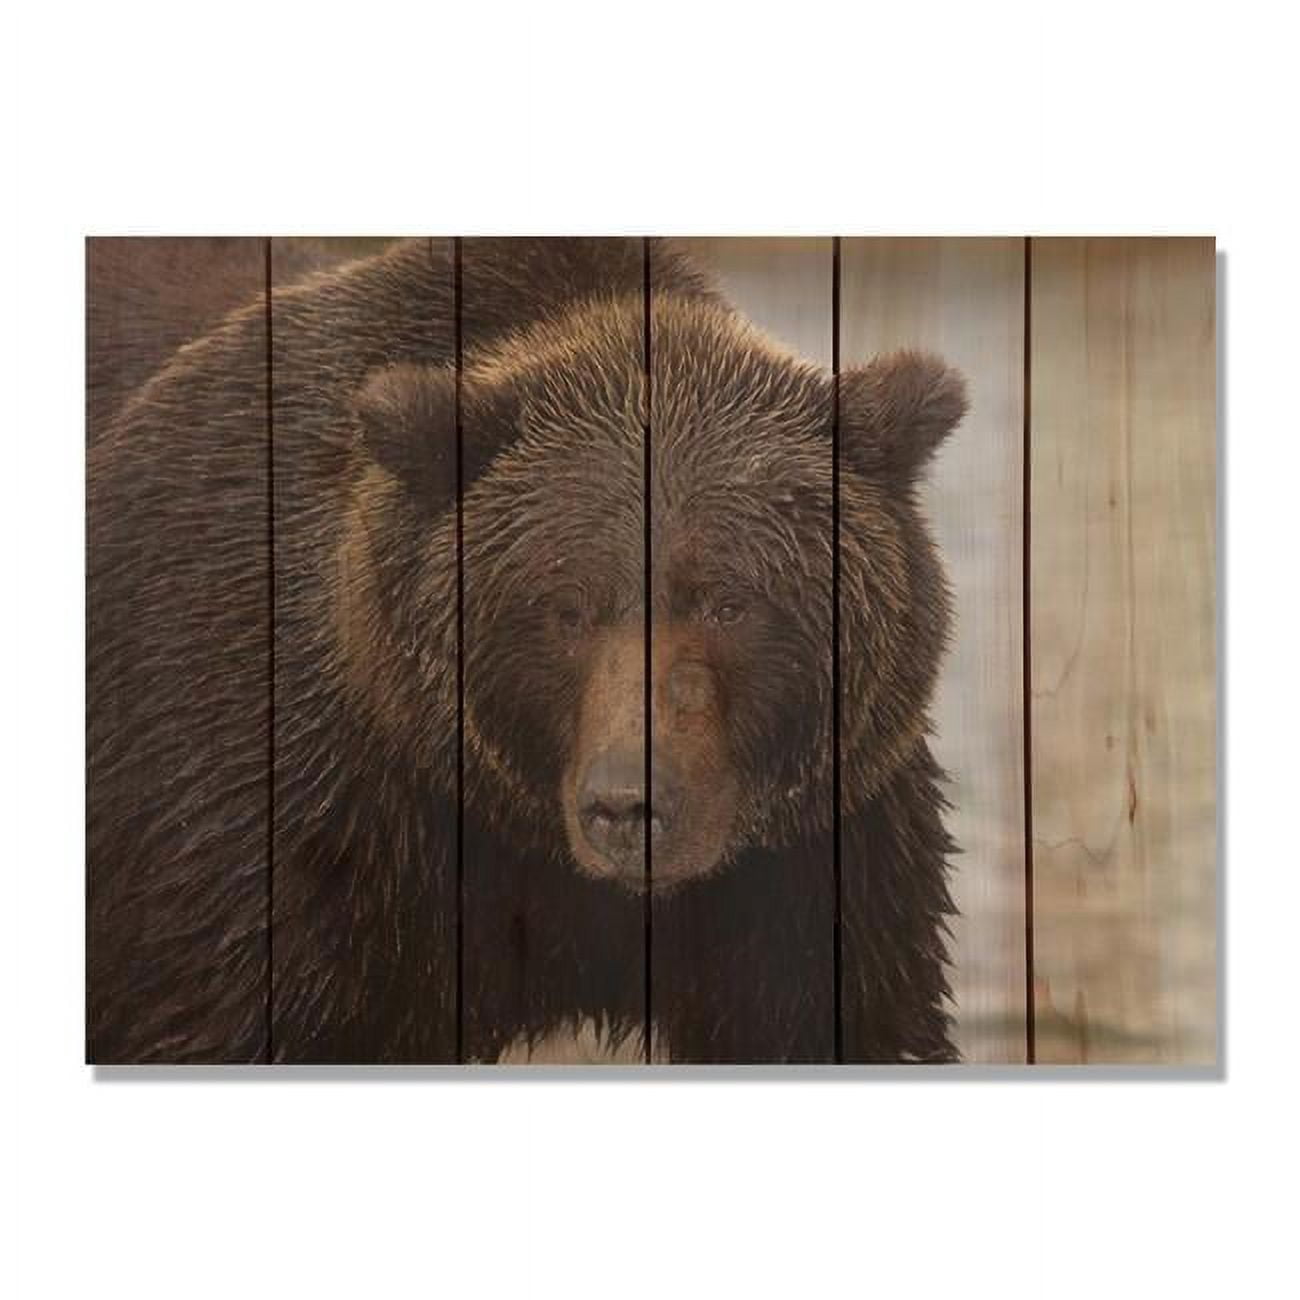 Day Dream Hq Bb3324 33 X 24 In. Big Bear Inside & Outside Cedar Wall Art